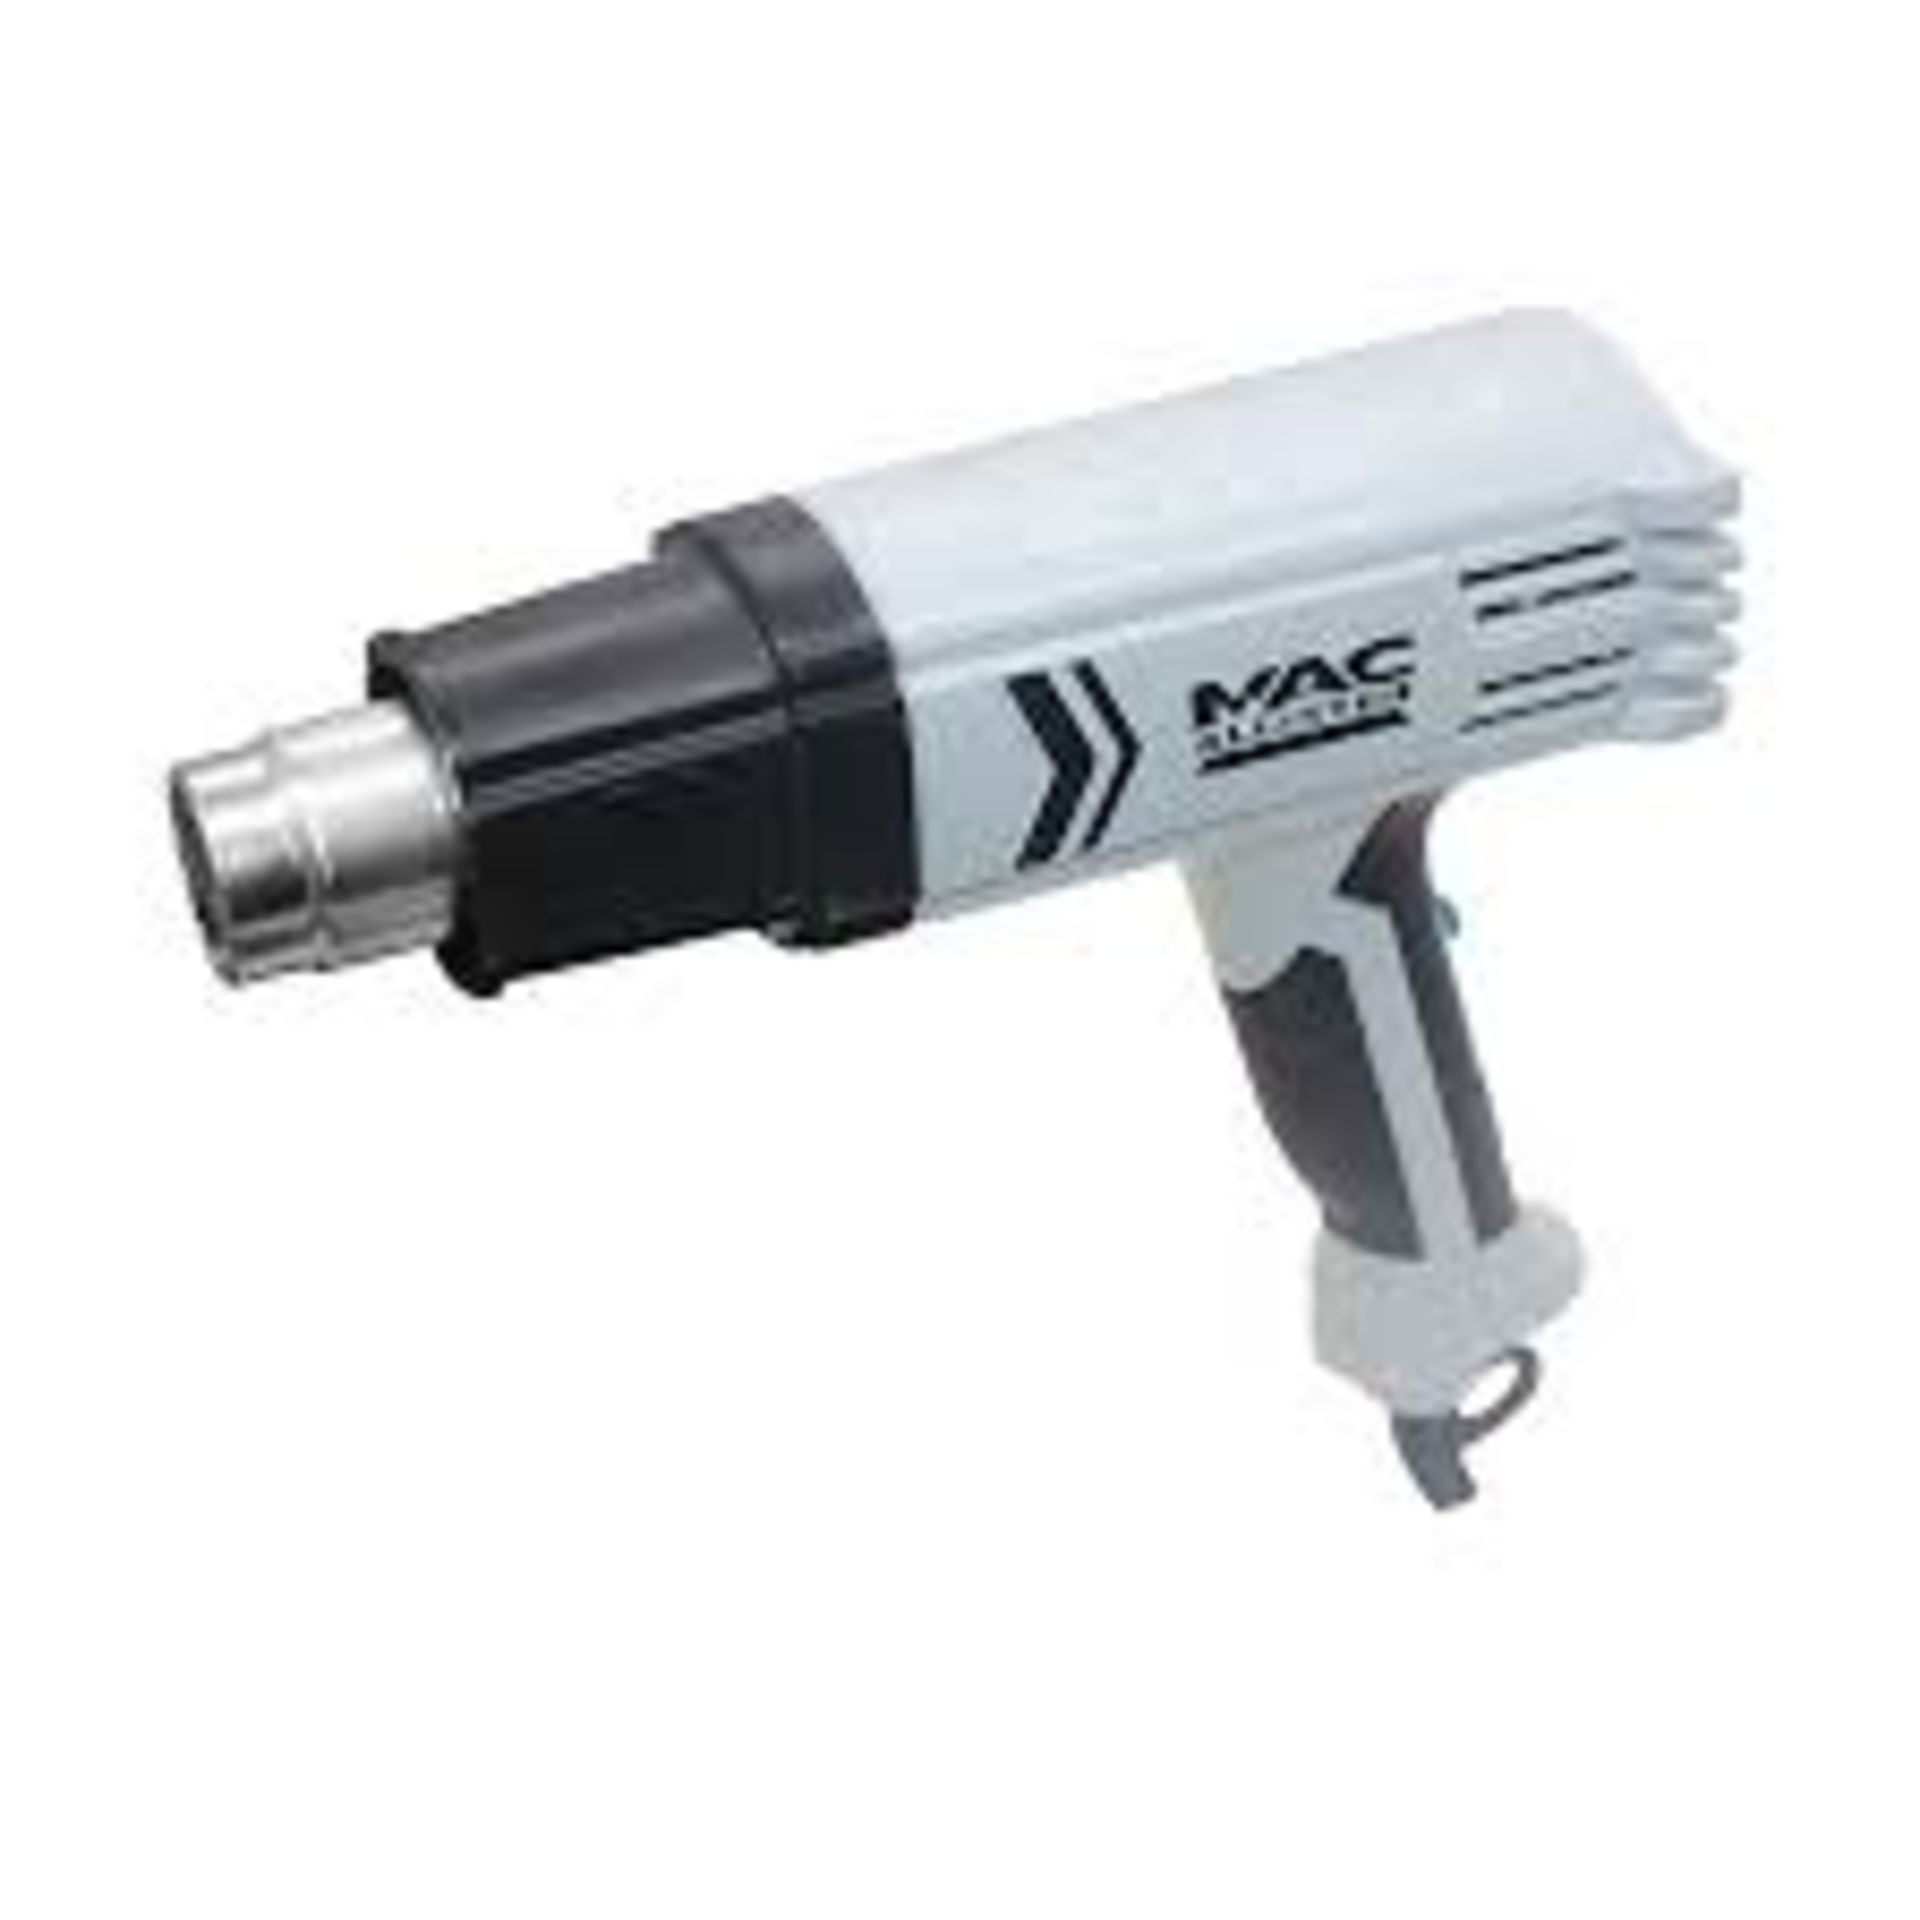 Mac Allister 2000W 240V Corded Heat gun MHG2000. -ER46. Powerful heat gun with adjustable heat and